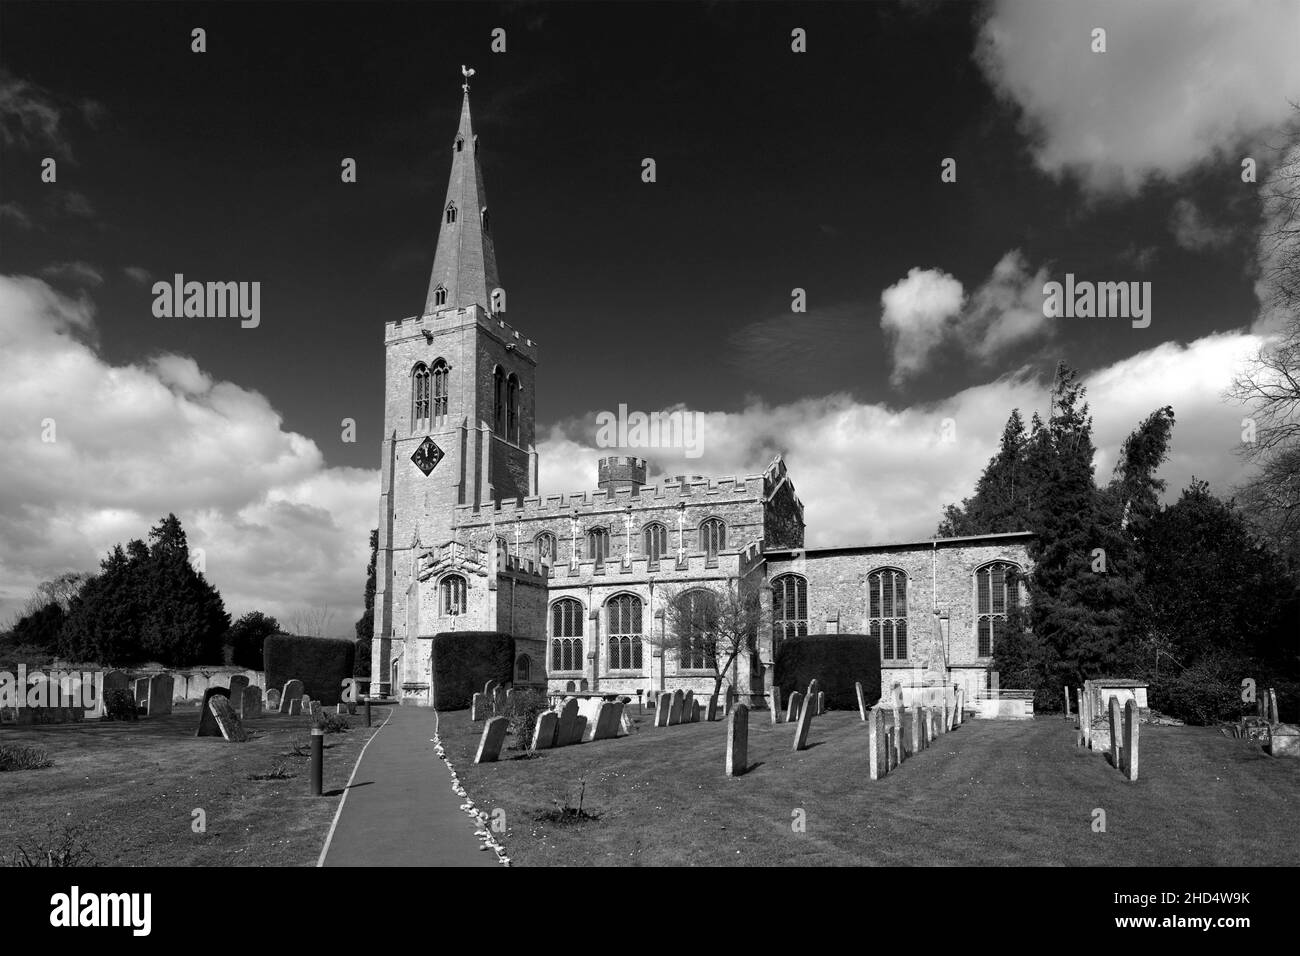 St Marys church and Buckden Towers, Buckden village, Cambridgeshire, England, UK Stock Photo